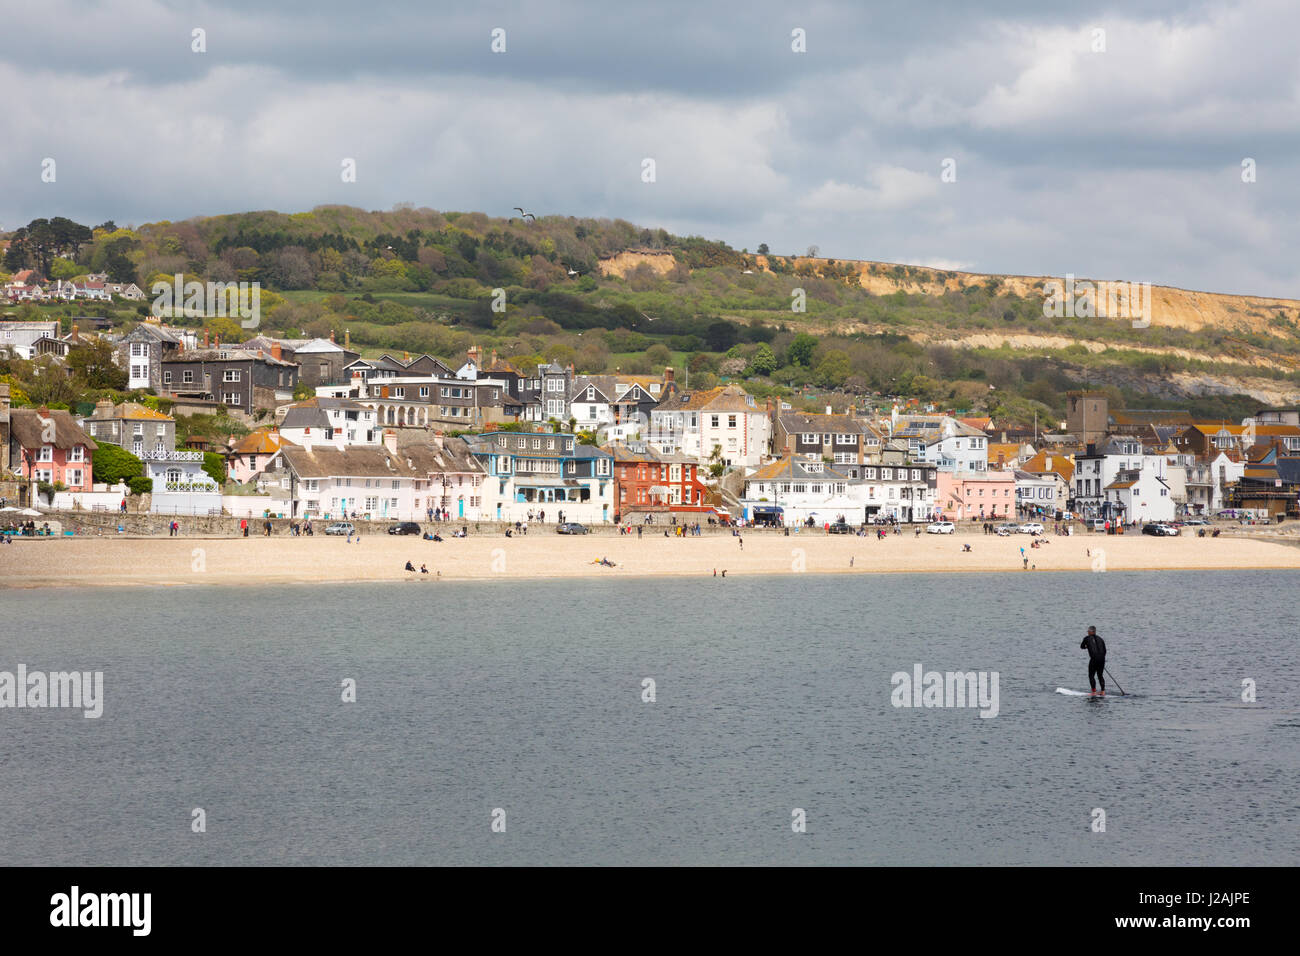 Lyme Regis Beach and Lyme Regis town seen from the sea, Lyme Regis, Dorset UK Stock Photo